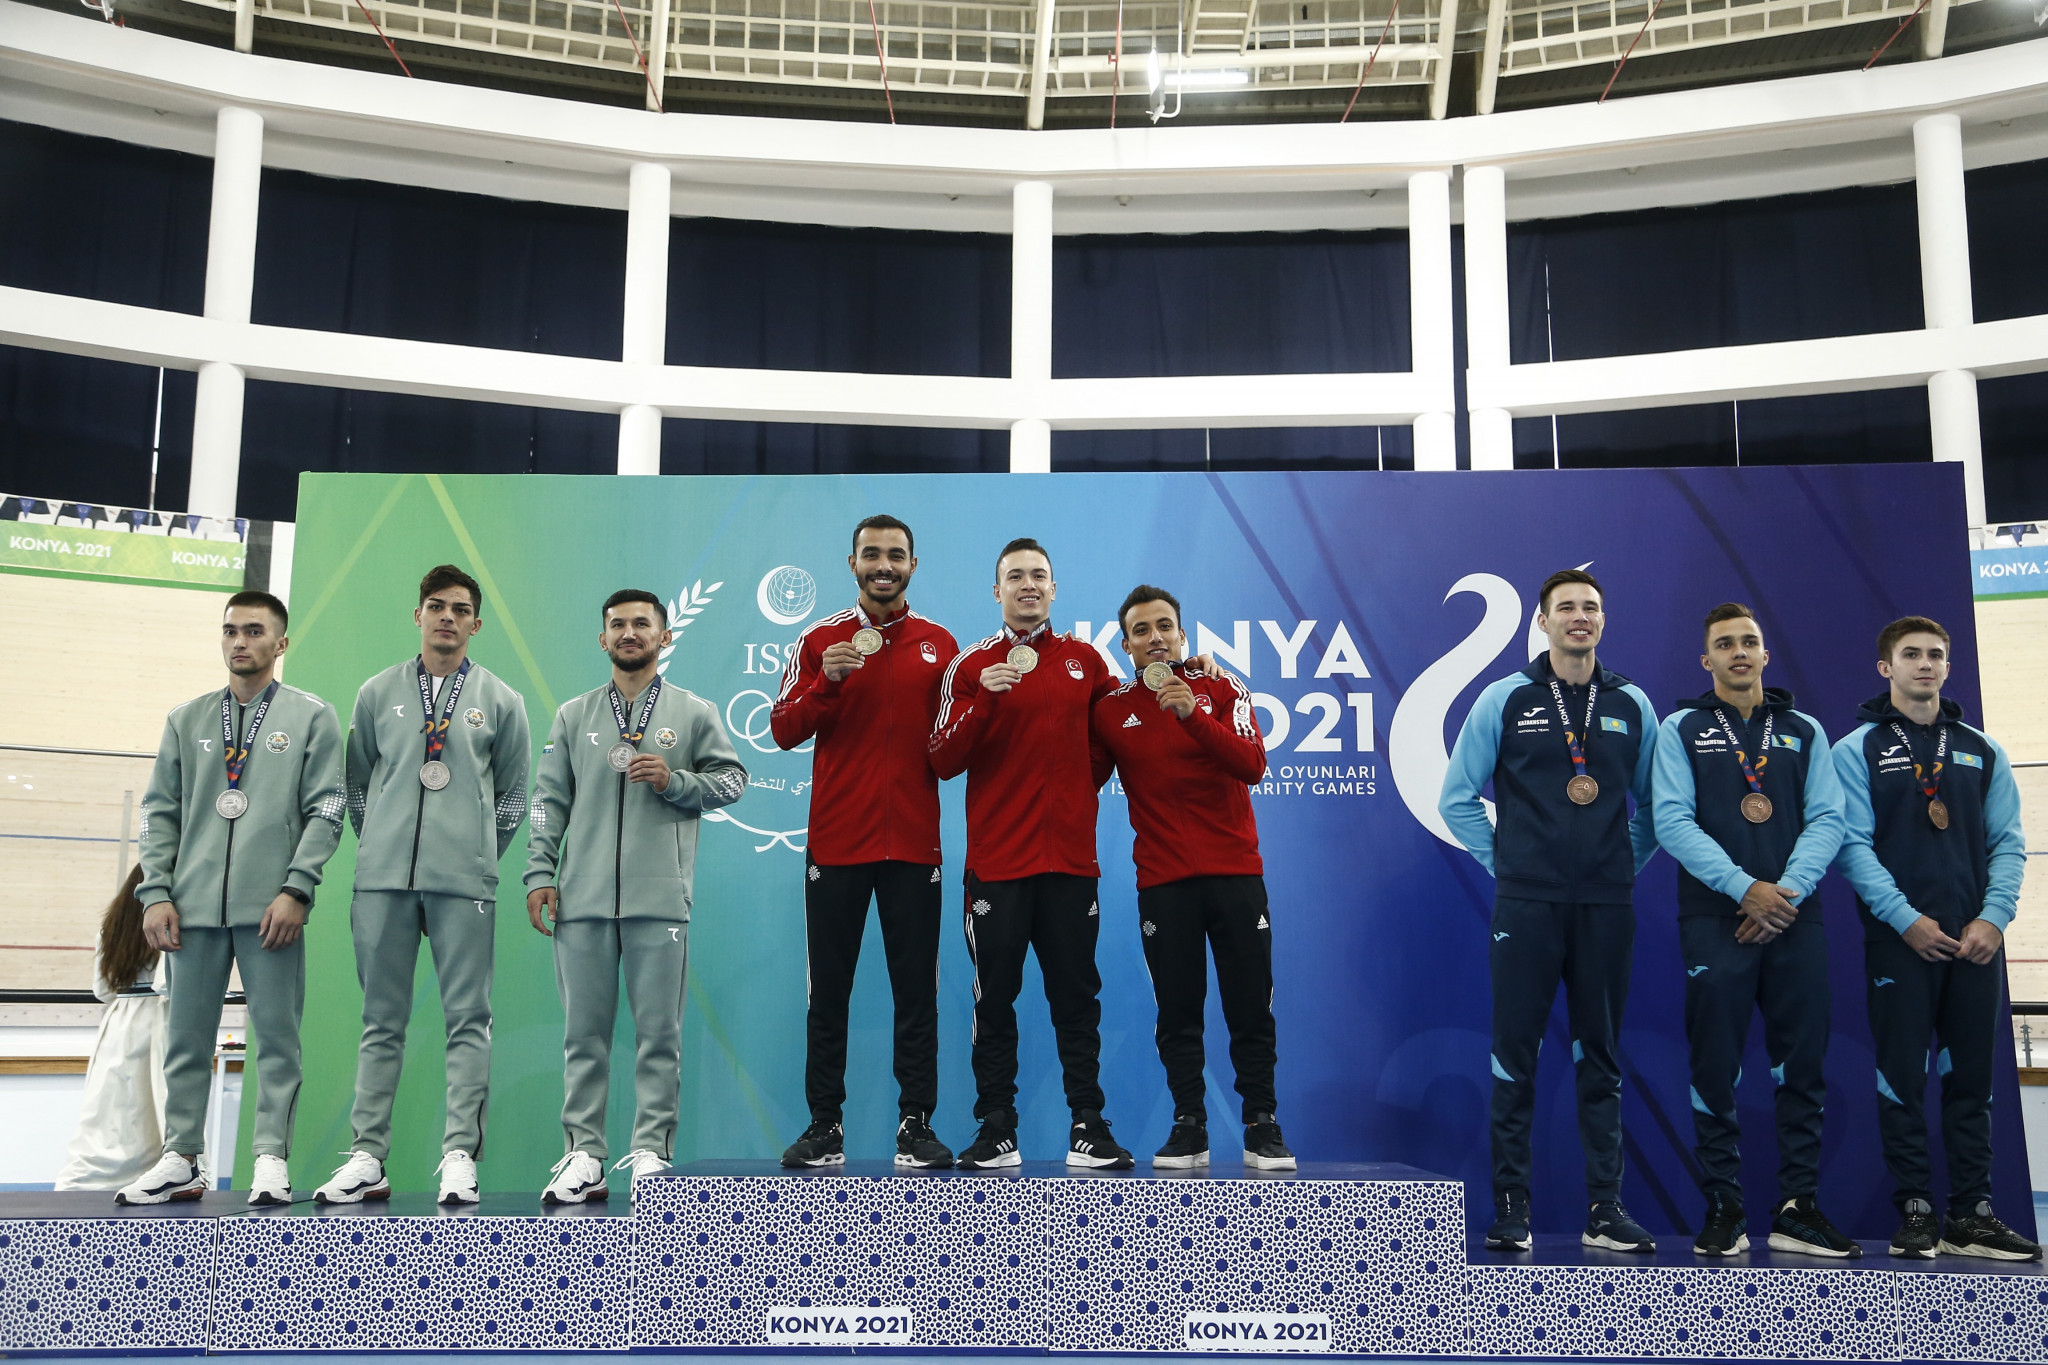 Adem Asil, Ferhat Arican and Ahmet Onder won the men's team title in Konya ©Konya 2021